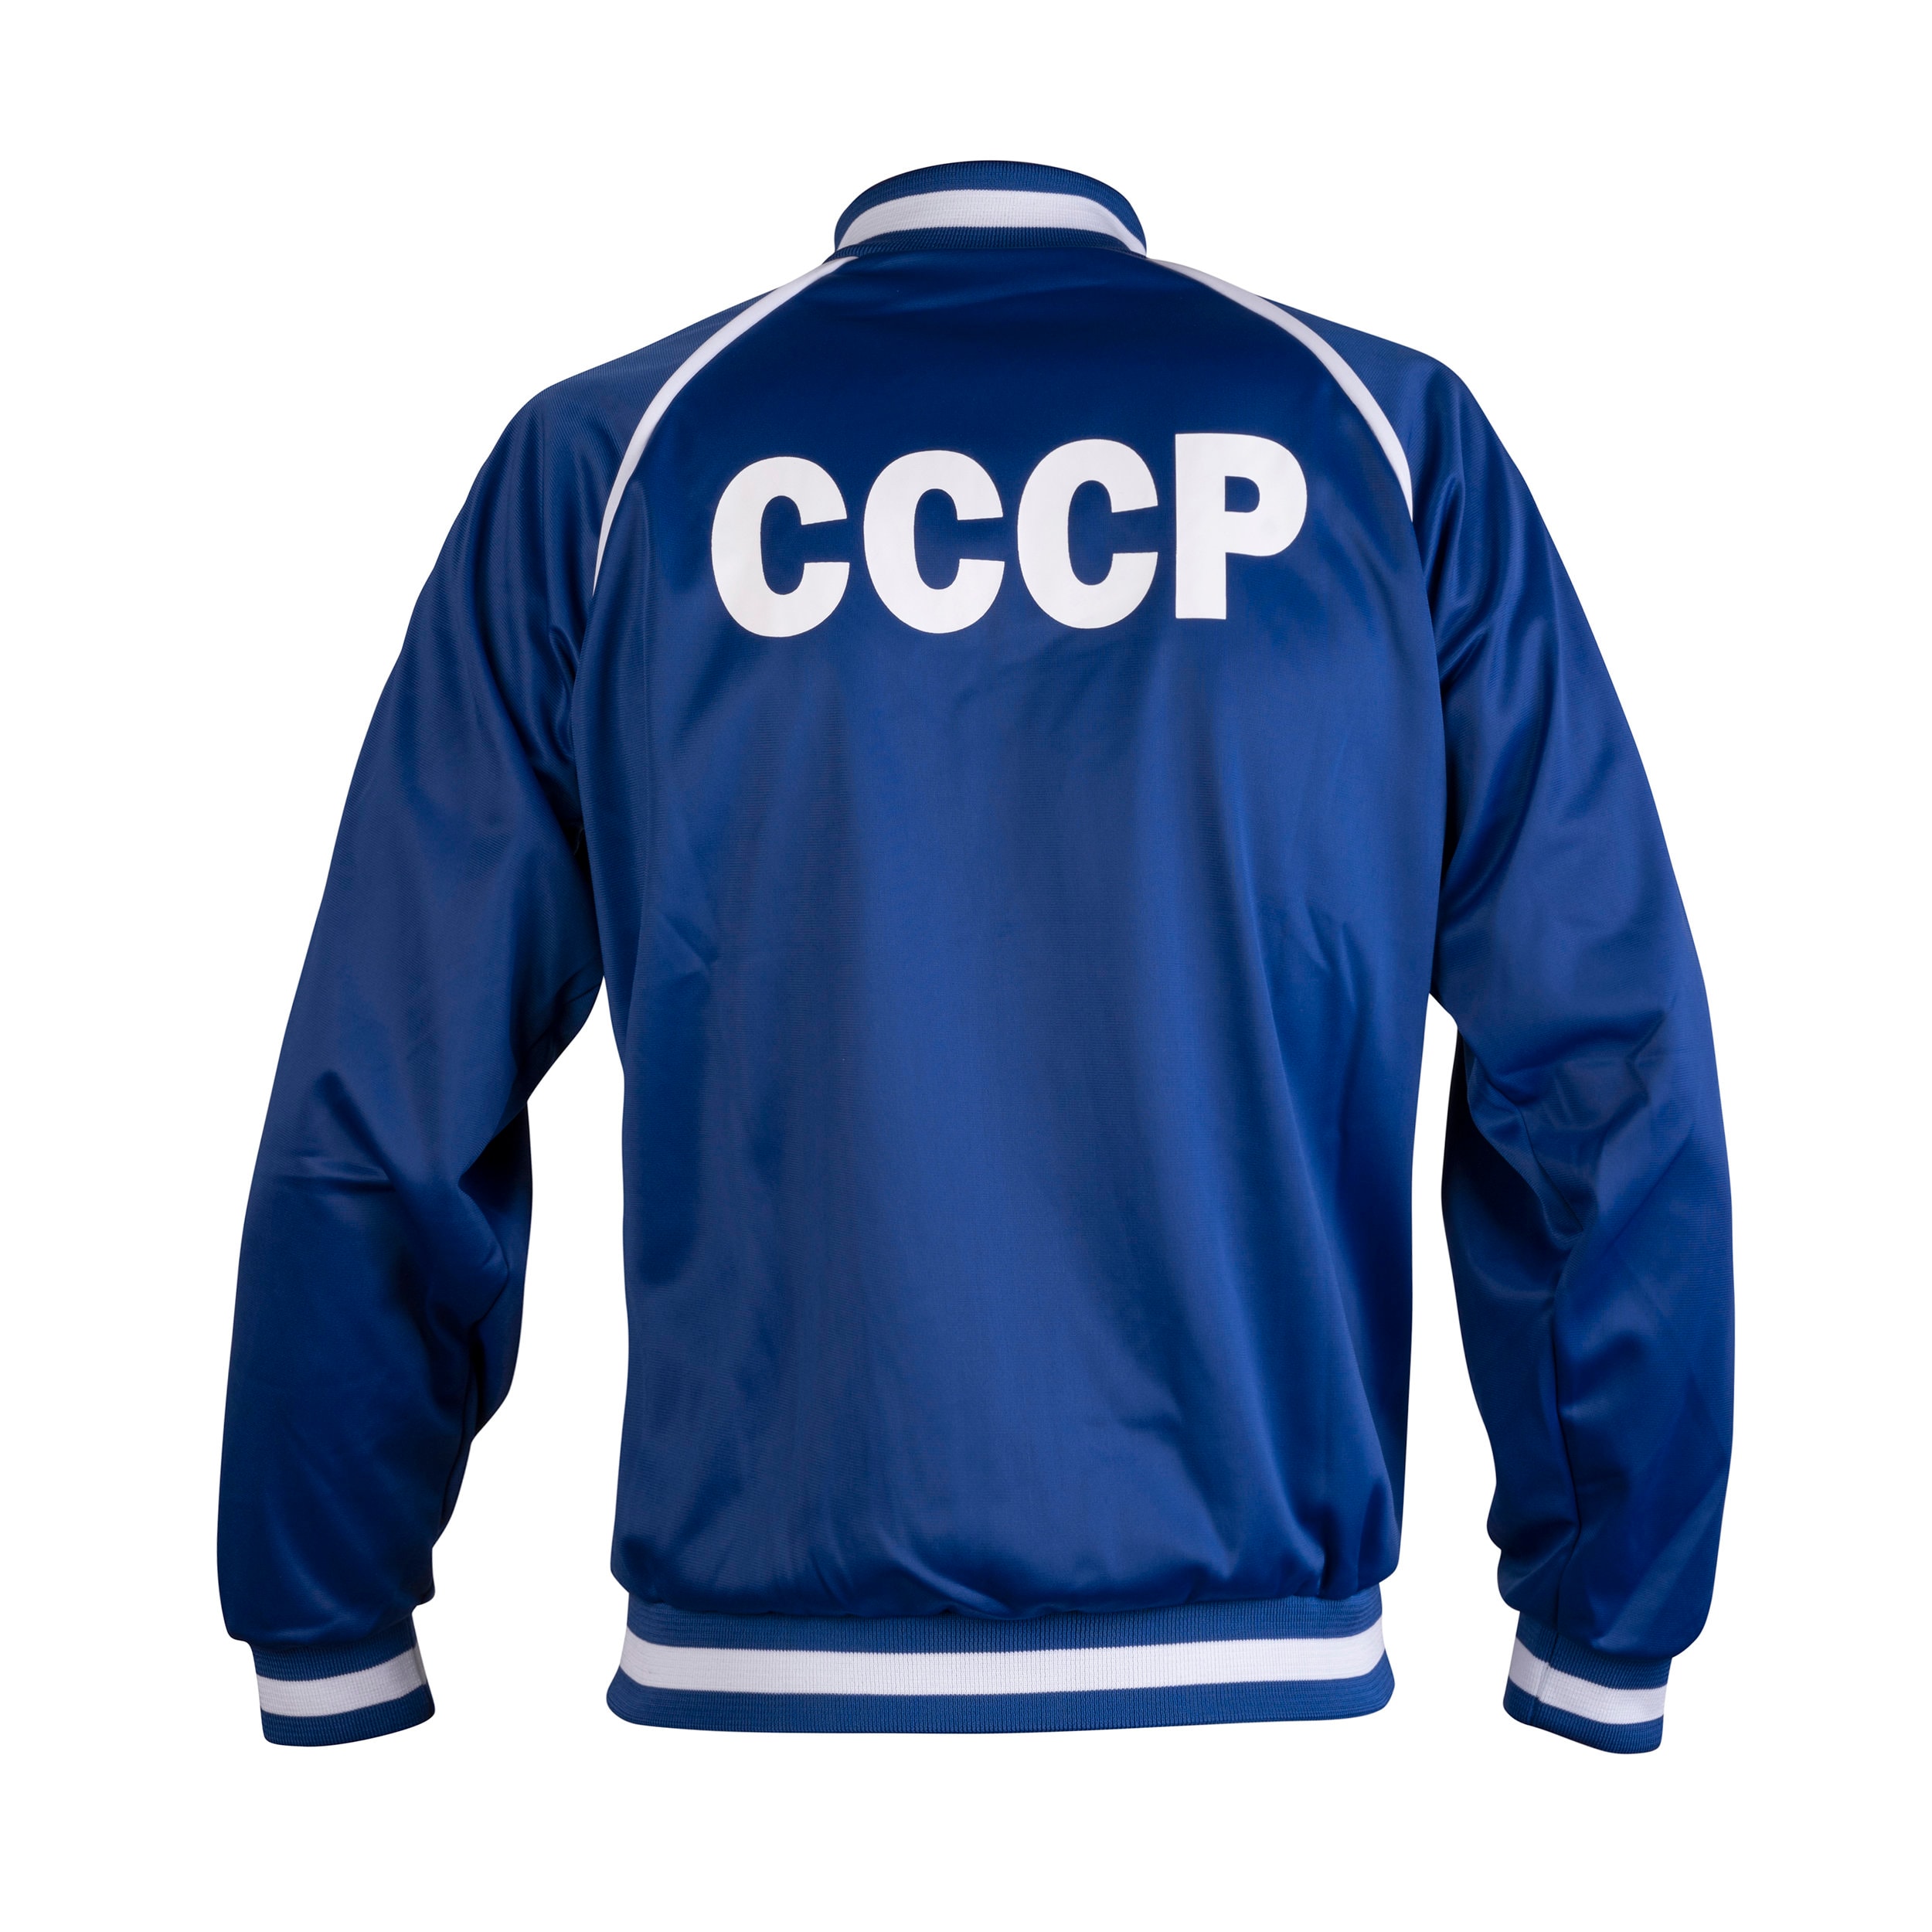 Guarda la ropa ruptura Indiferencia Era comunista Europa del Este Unión Soviética Rusia CCCP / - Etsy España